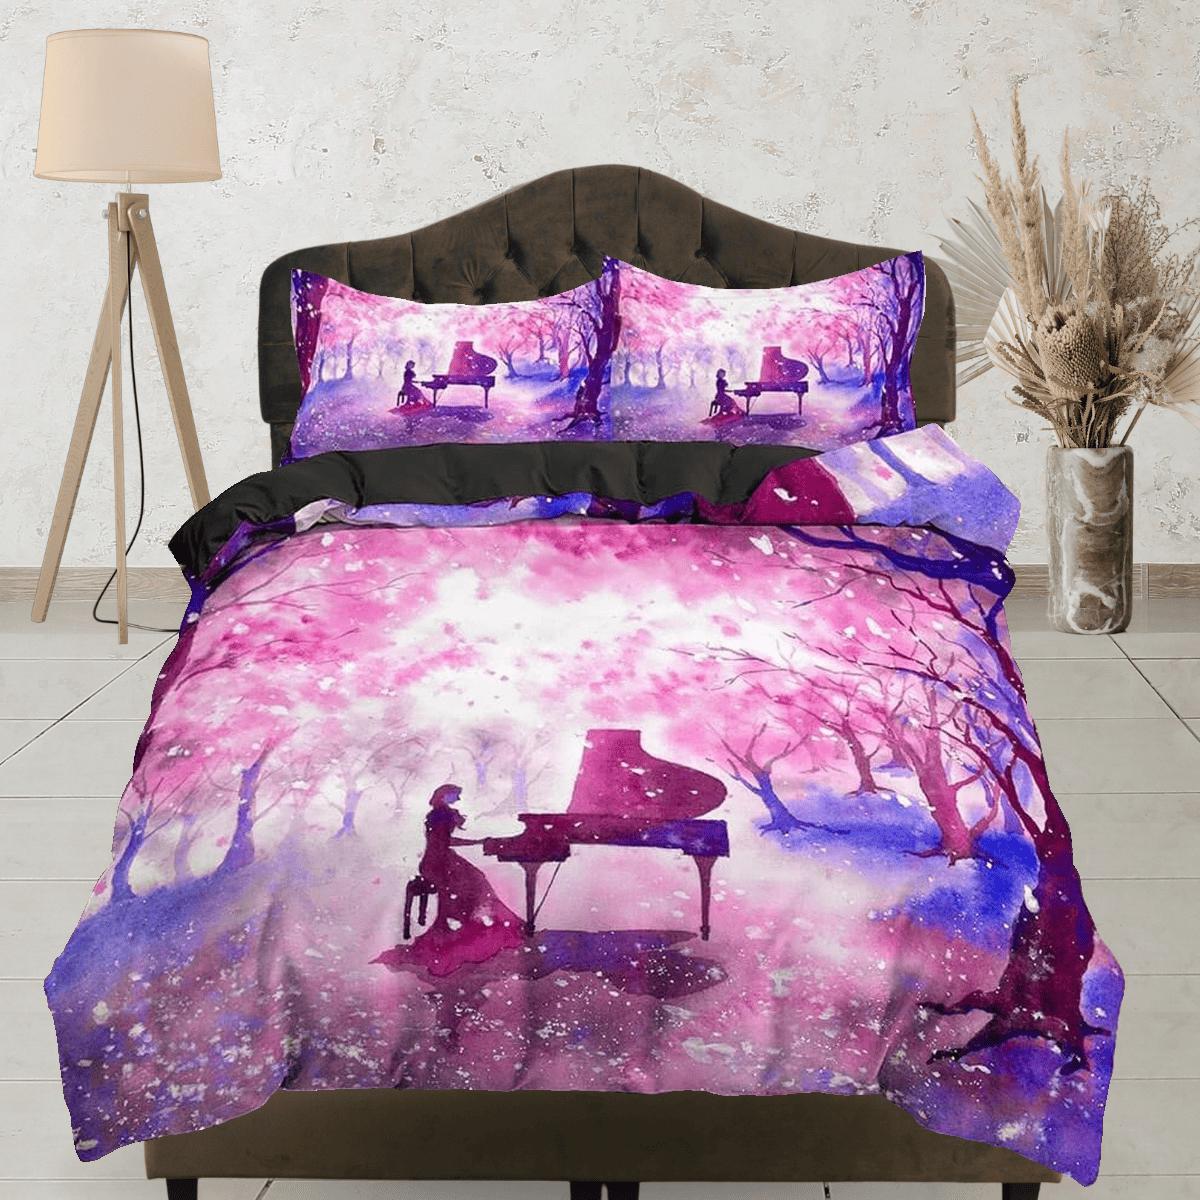 daintyduvet Night piano cherry blossom bedding floral prints duvet cover queen, king, boho bedding designer bedspread full size bedding aesthetic